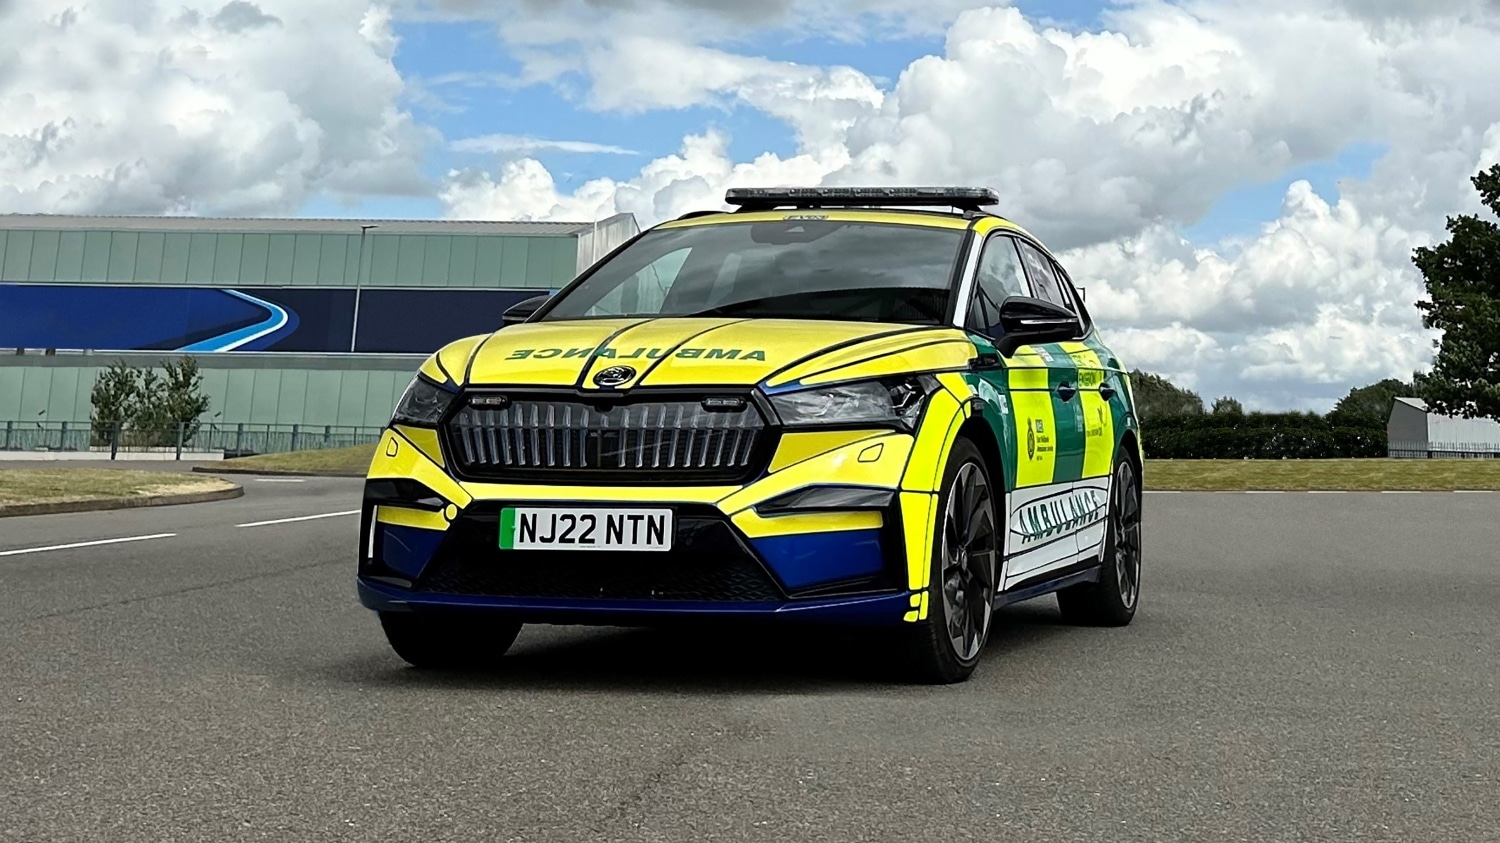 UK: East Midlands Ambulance Shifts to Electric With Škoda Enyaq - The ...